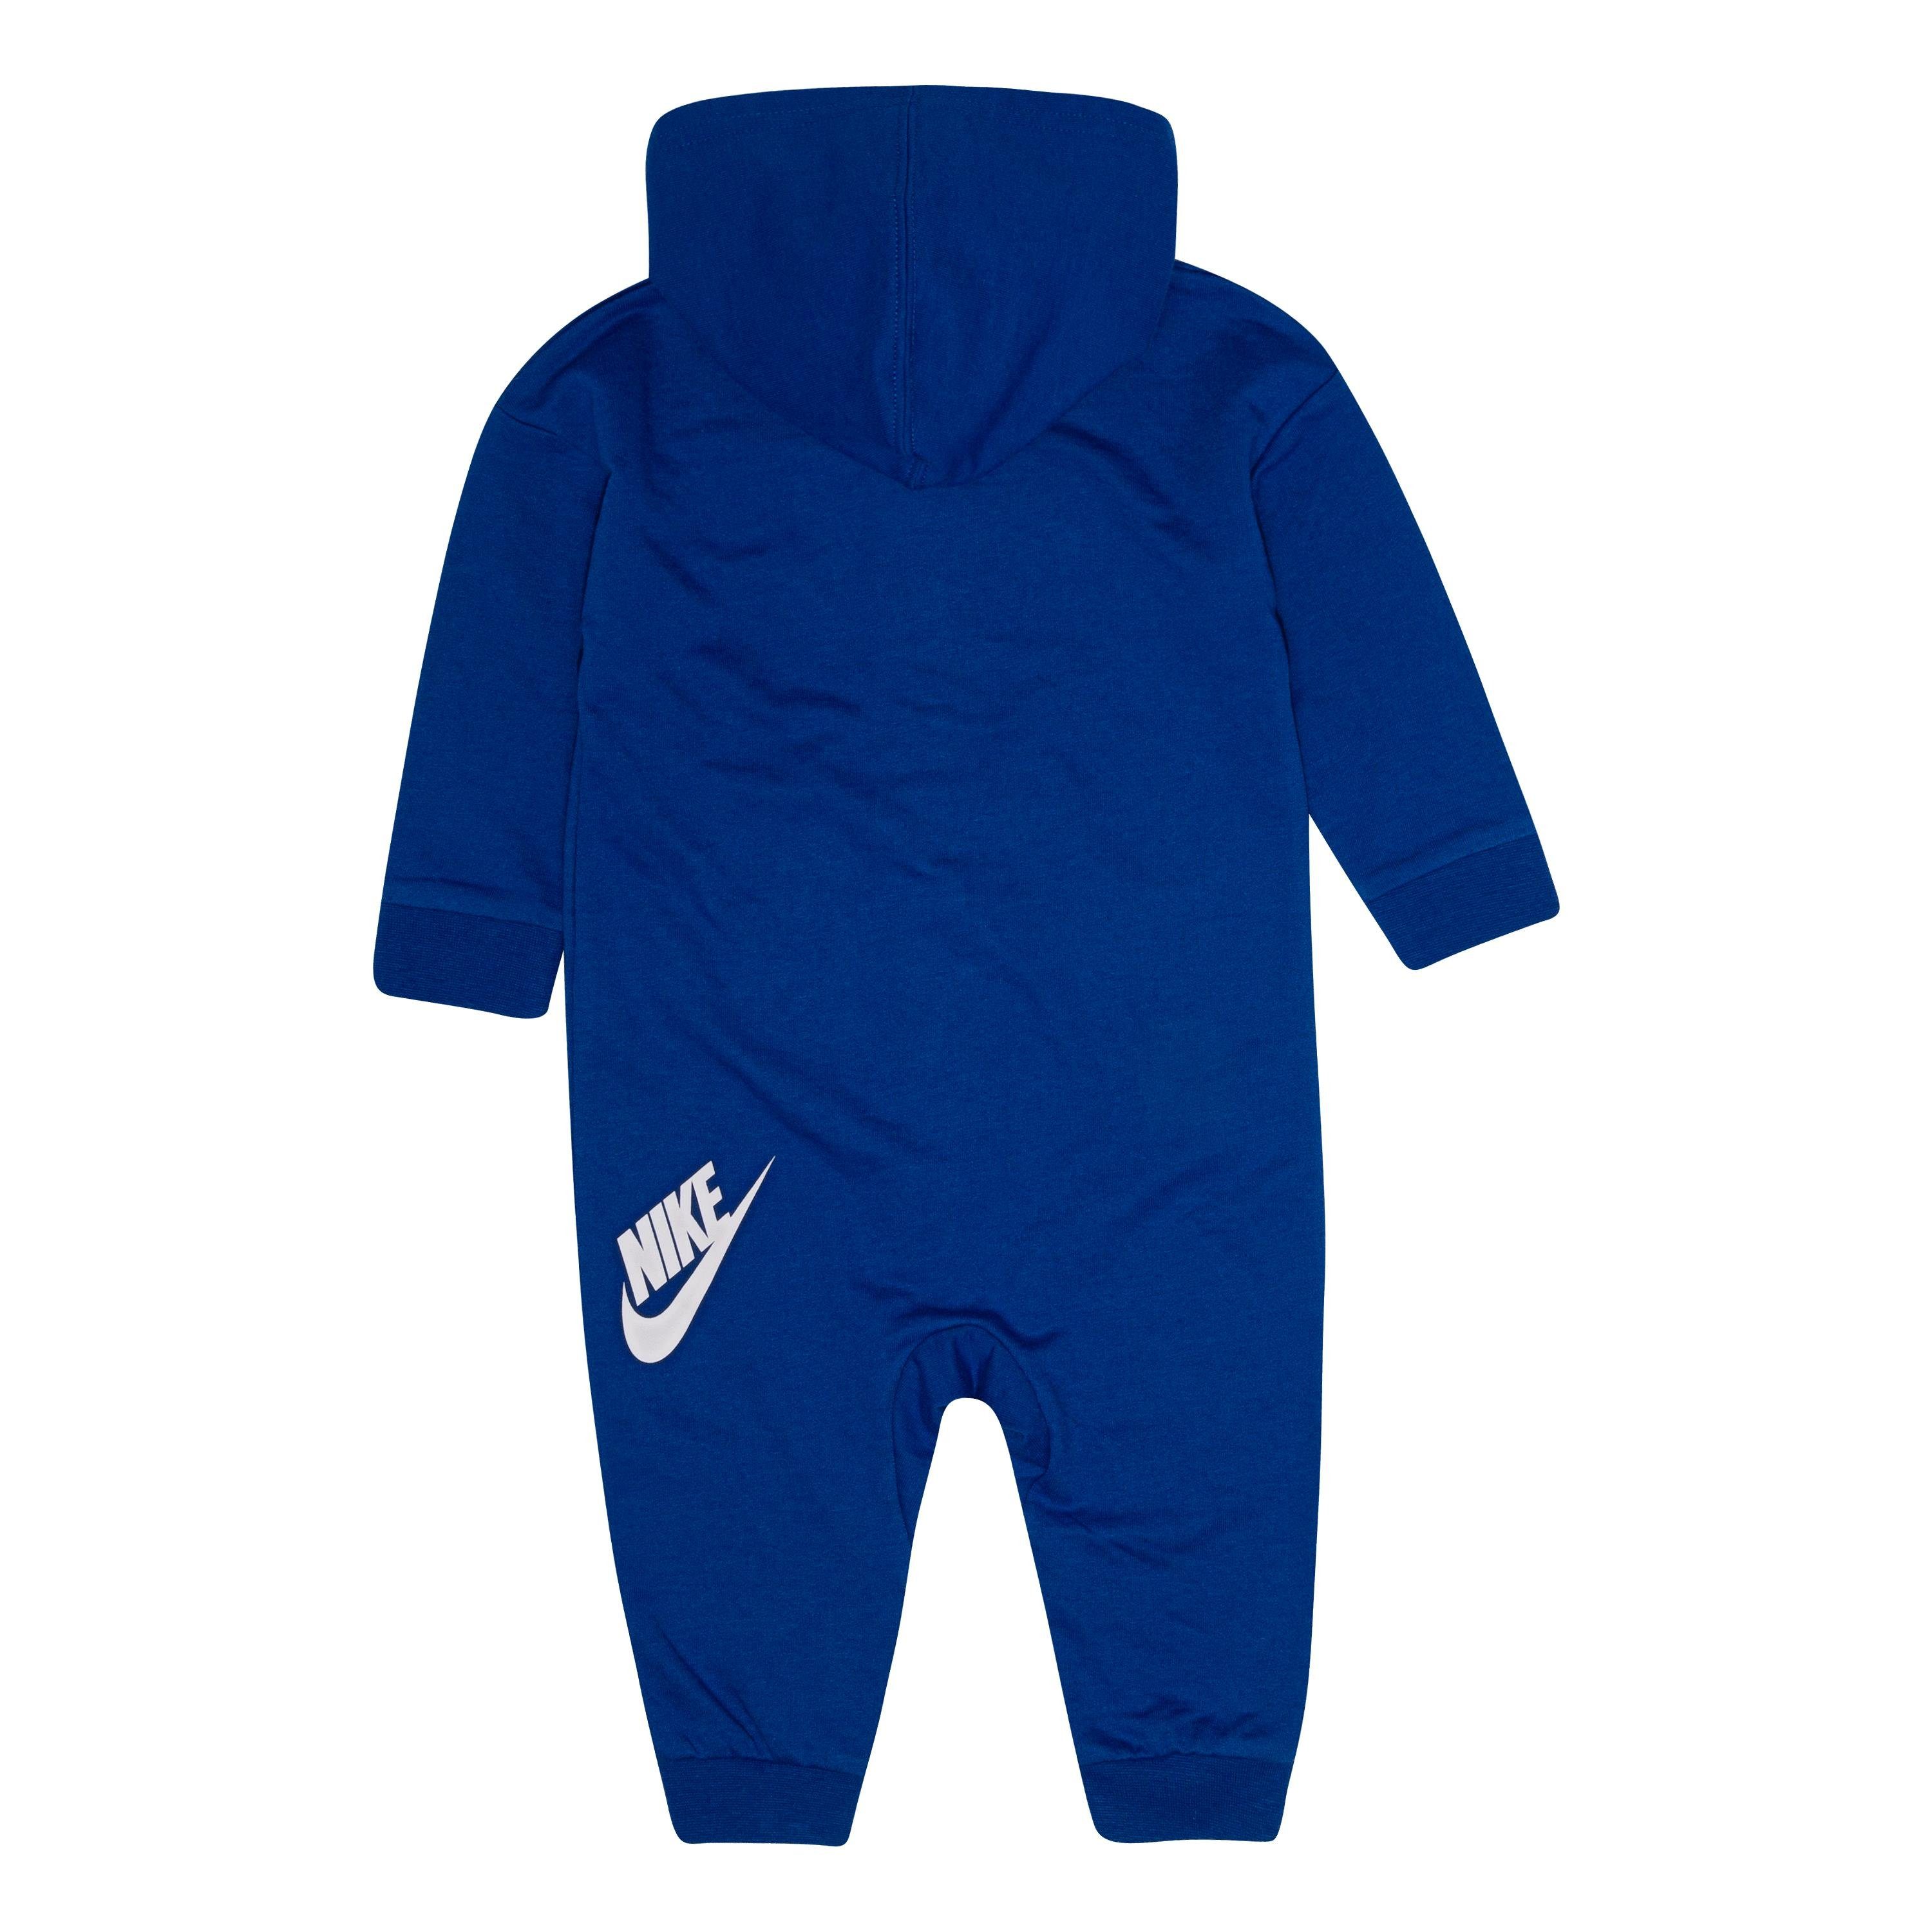 Strampler PLAY COVERALL ALL Nike blau-weiß DAY NKN Sportswear